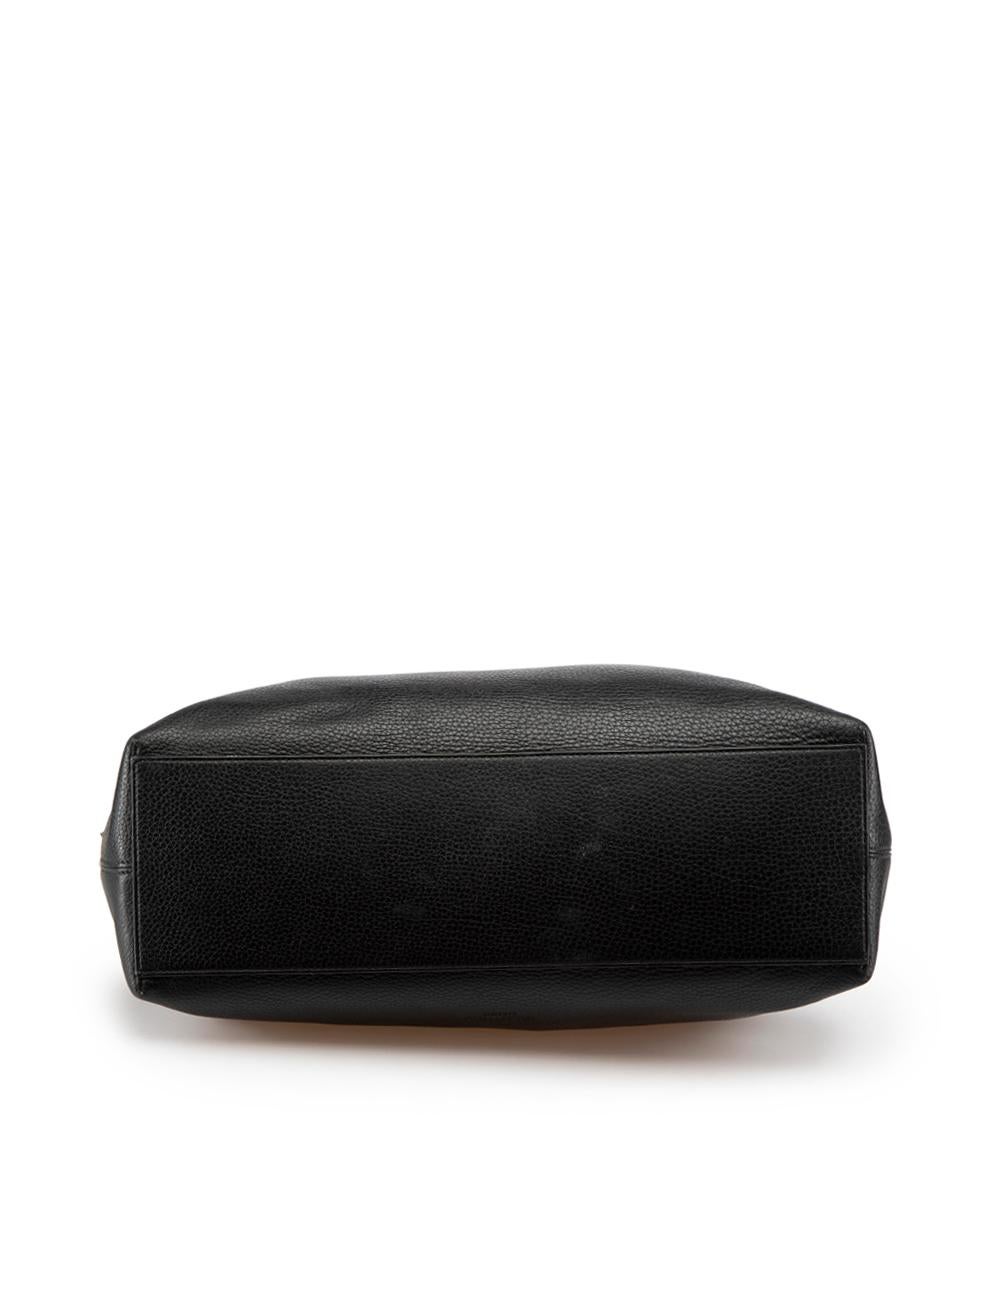 Women's Valentino Black Leather Rockstud Tote Bag